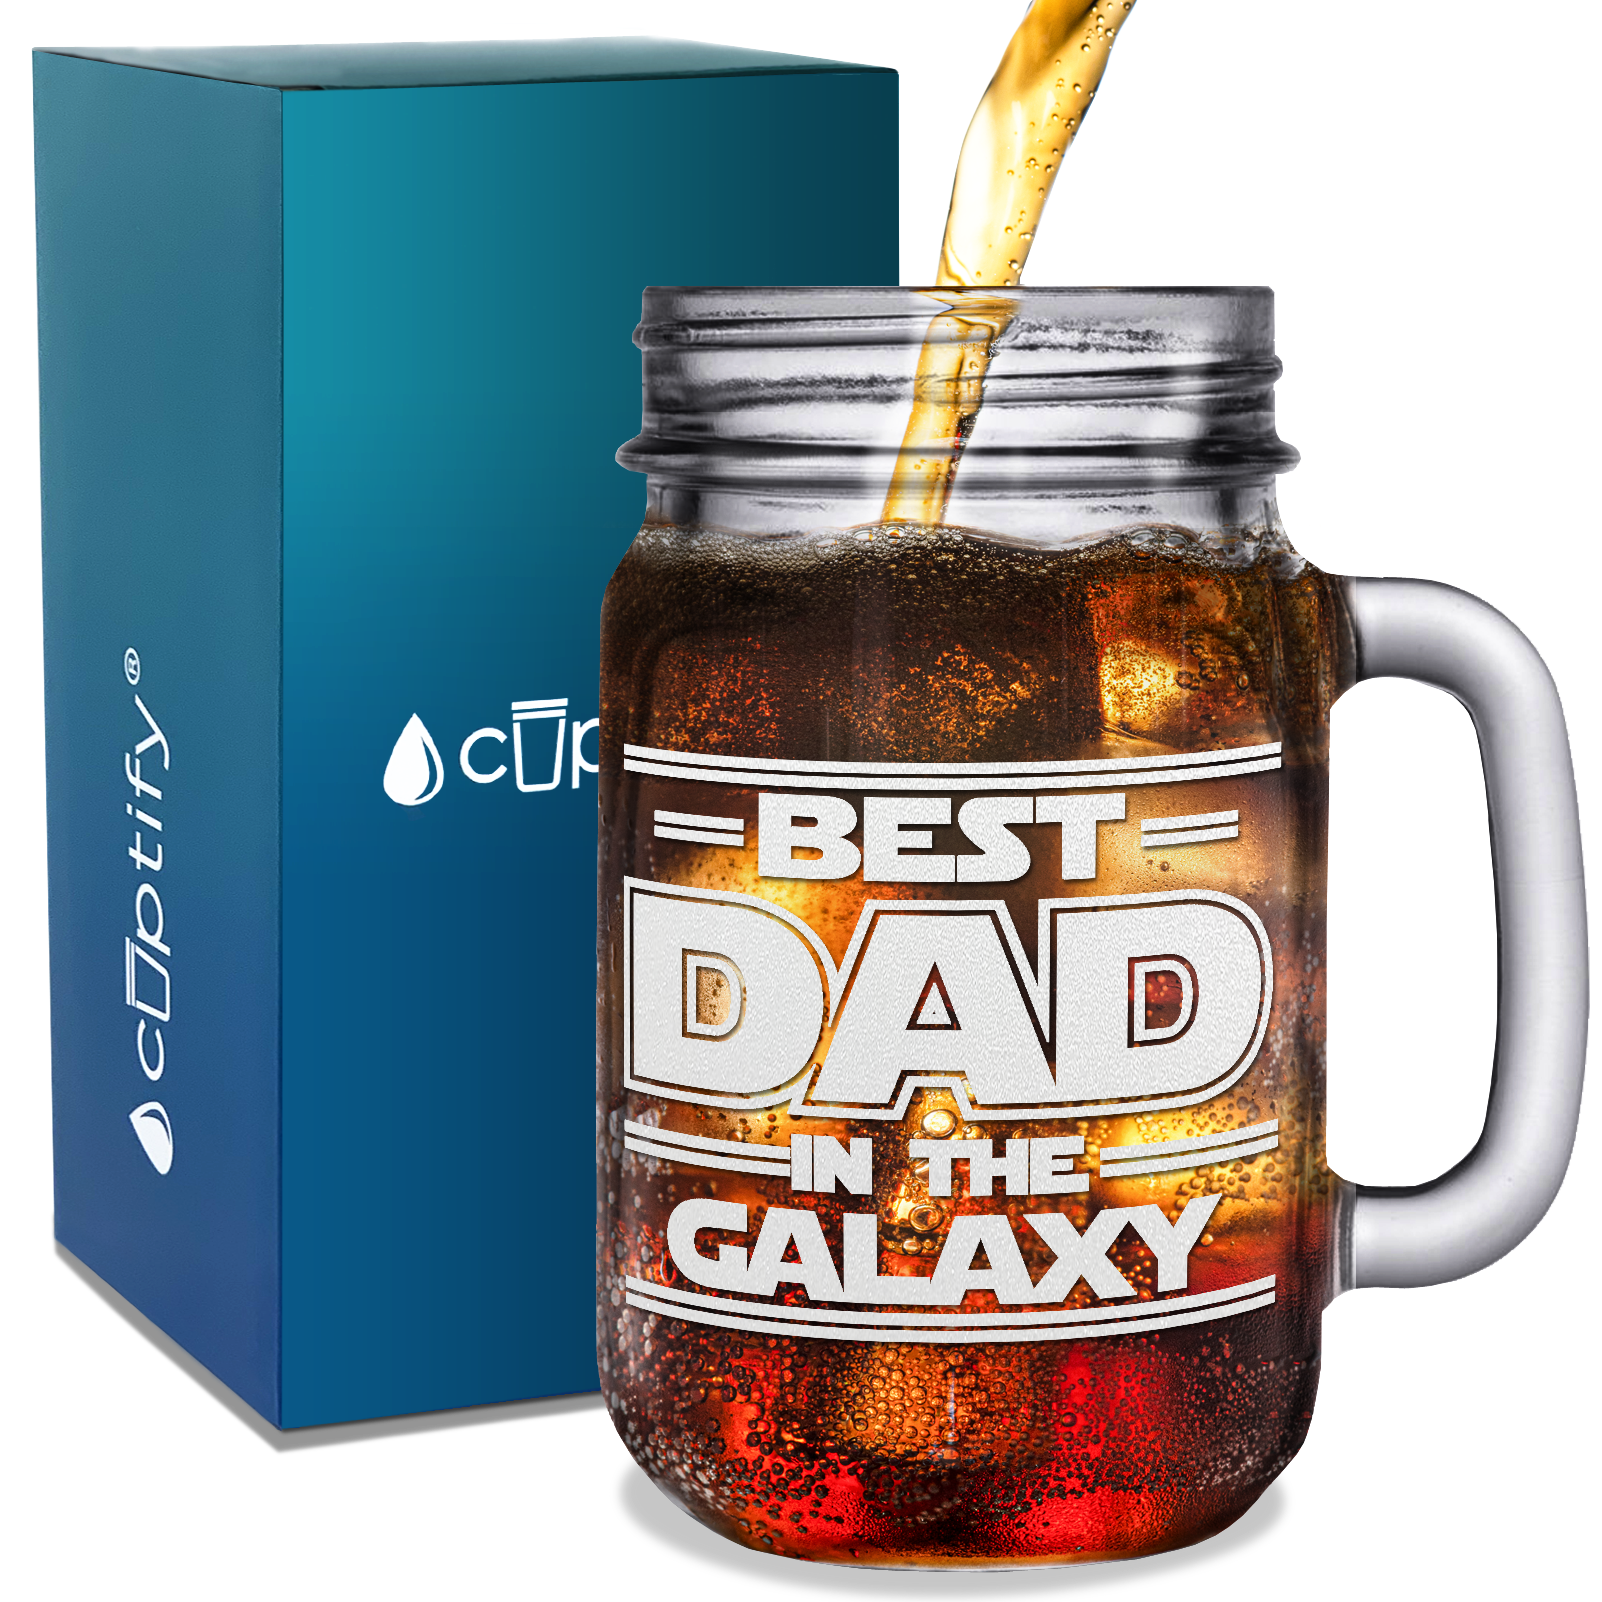 Best Dad In The Galaxy Etched on 16oz Mason Jar Glass